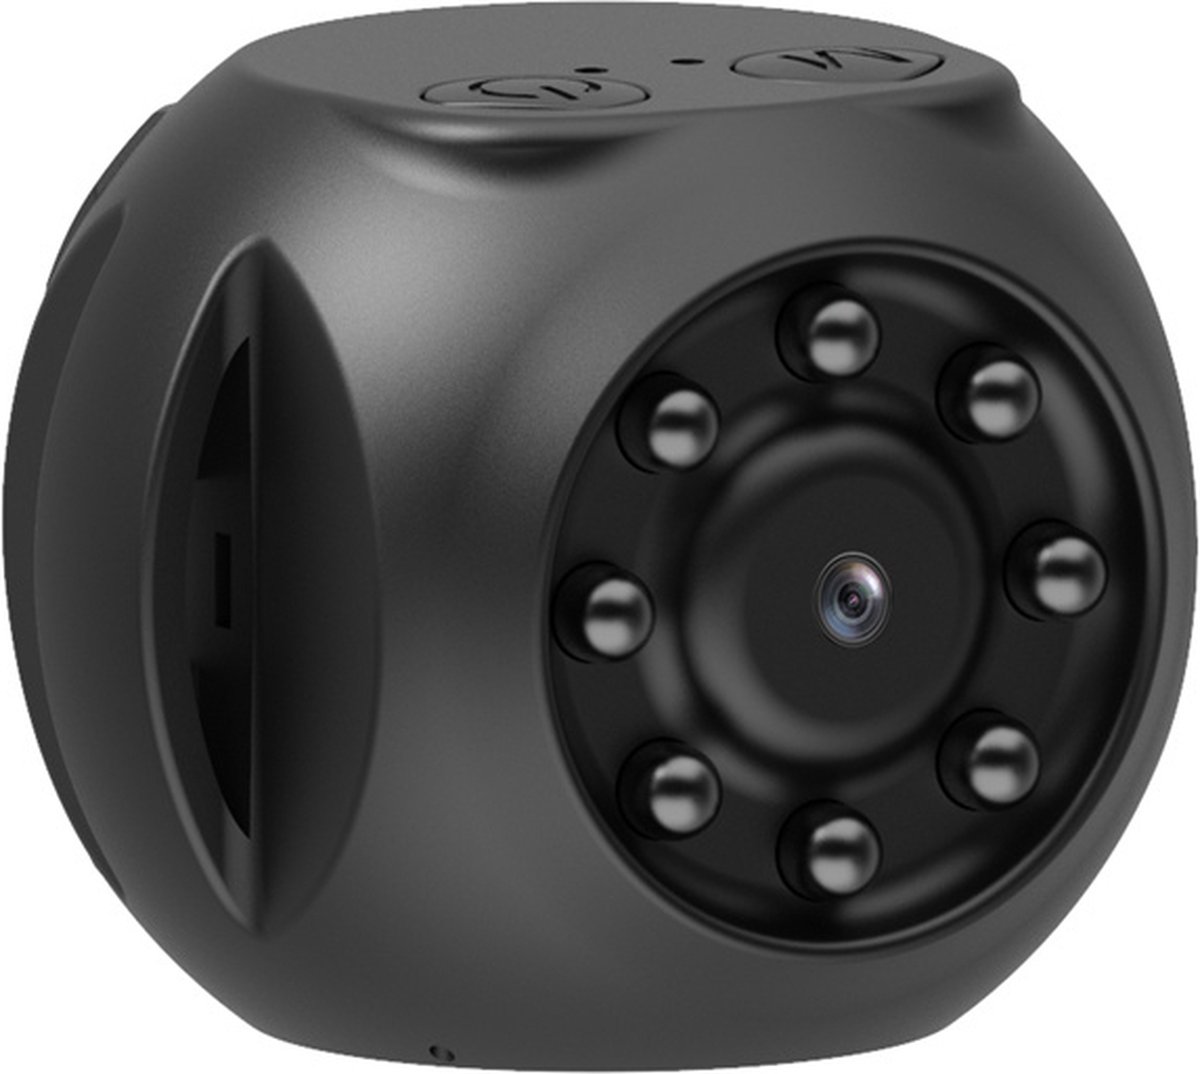 Narvie Mini Camera 1080p - Spy Camera Wifi met App - Verborgen Camera Beveiliging - Spionage Camera - IP Bewakingscamera - Geheime Camera